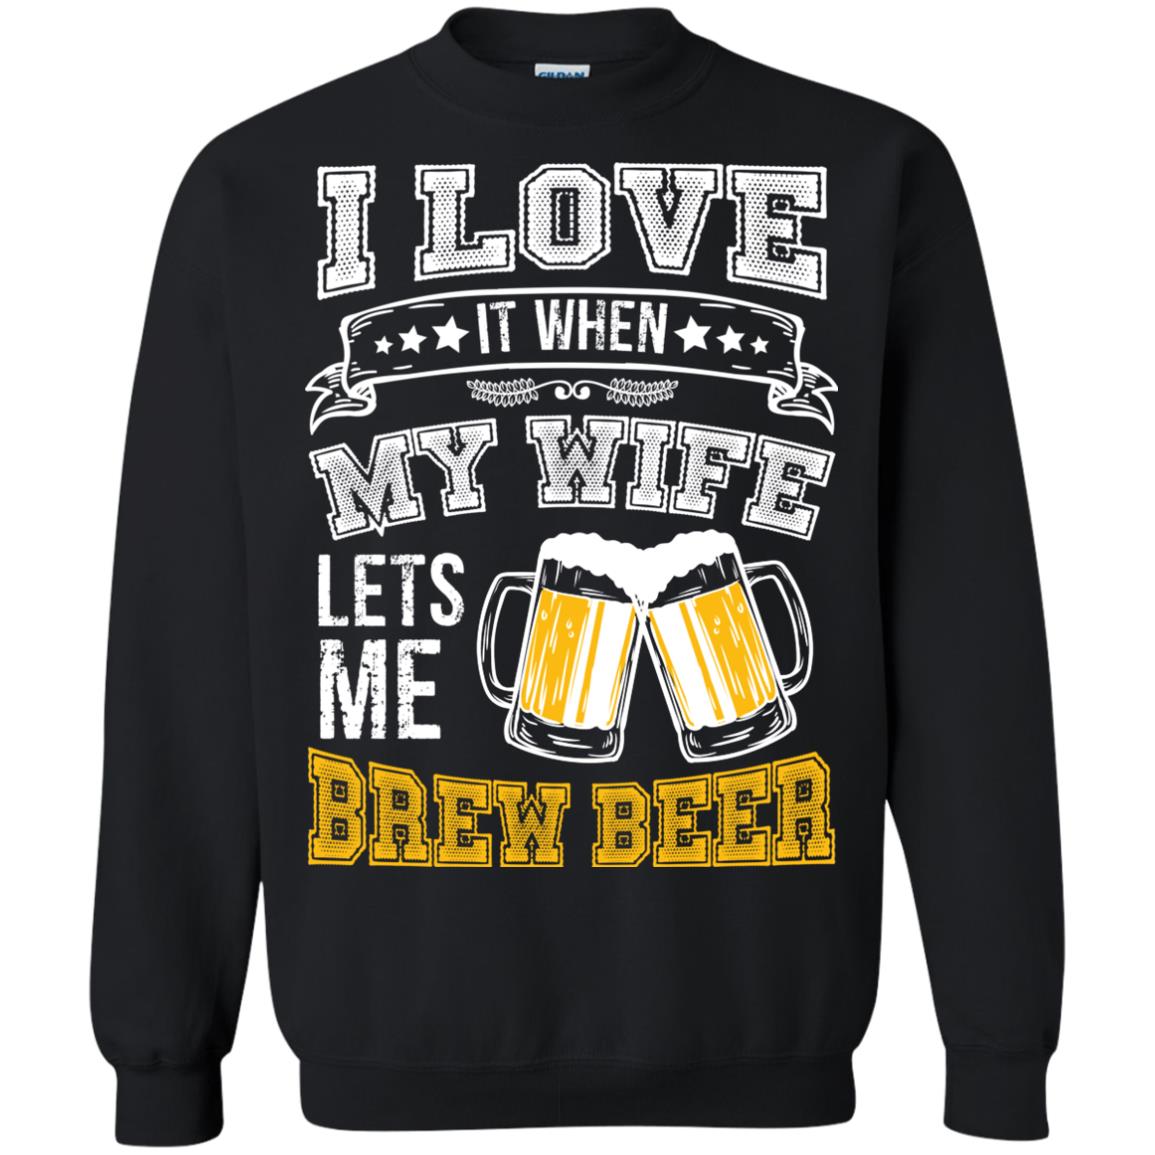 I Love It When My Wife Lets Me Brew Beer Shirt For HusbandG180 Gildan Crewneck Pullover Sweatshirt 8 oz.